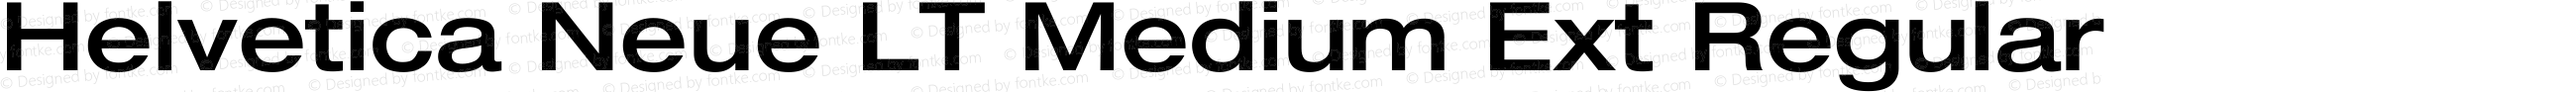 Helvetica Neue LT 63 Medium Extended